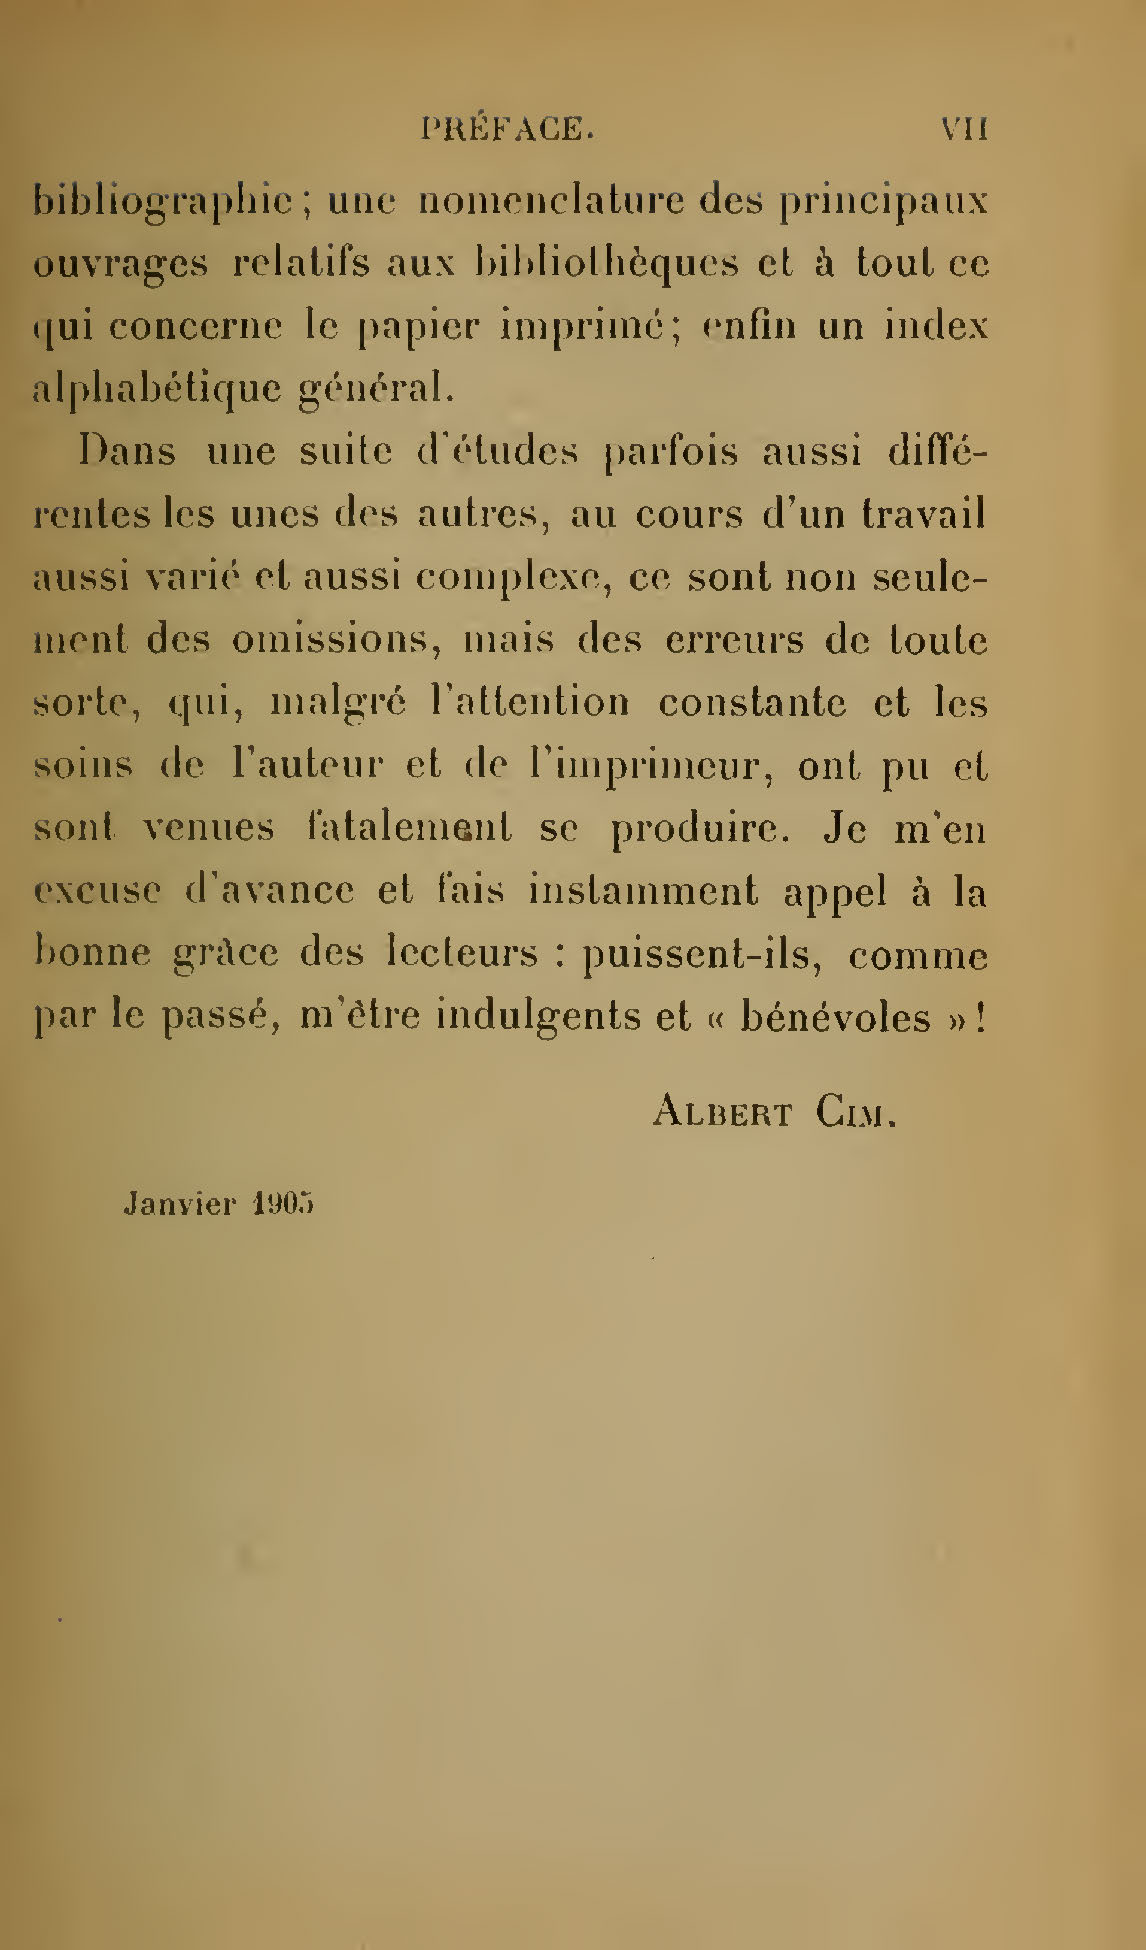 Albert Cim, Le Livre, t. I, p. VII.